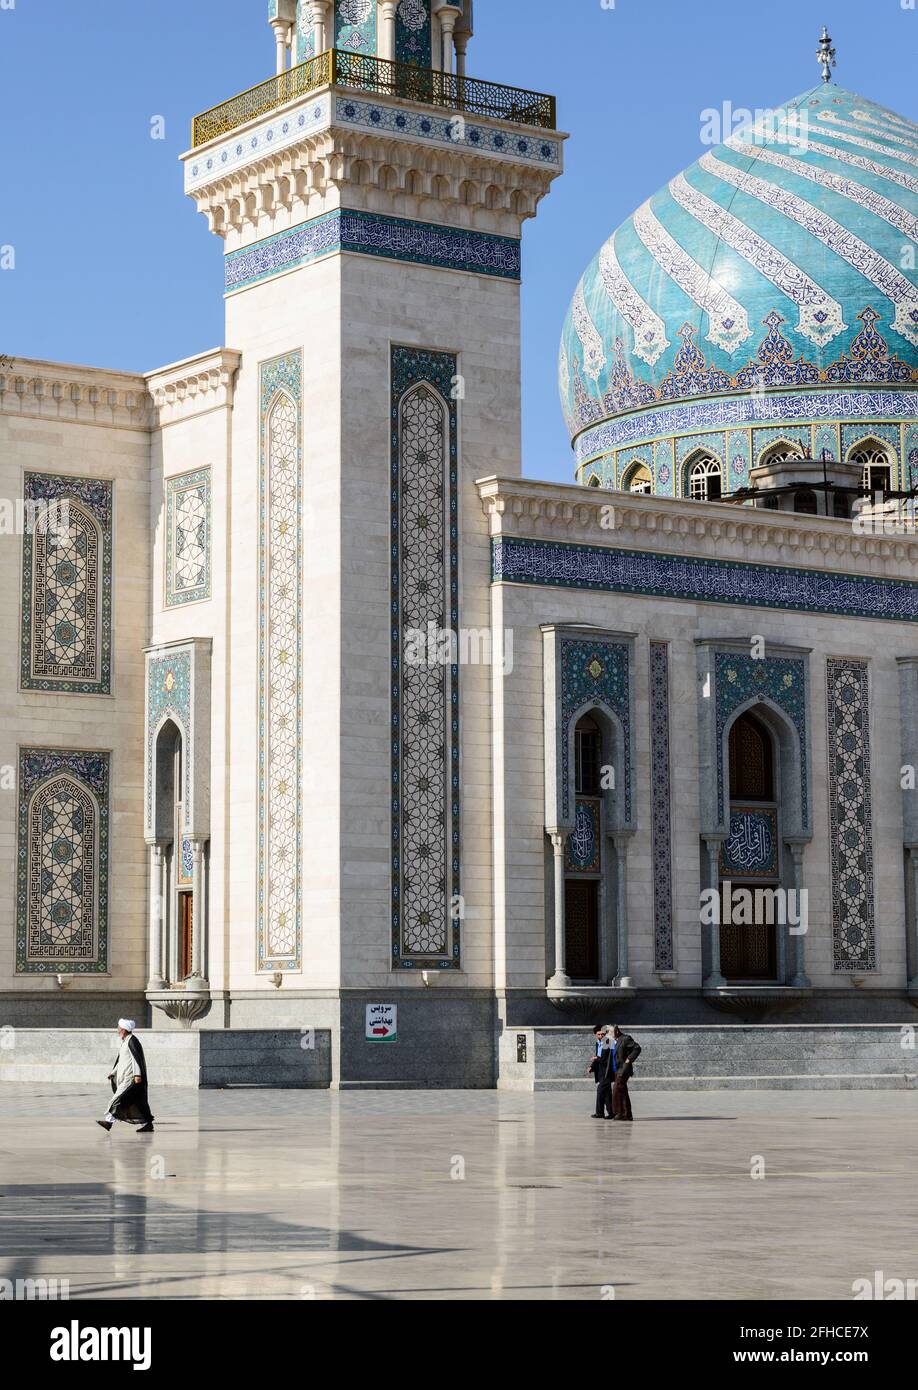 the Imām al-Ḥasan al-'Askarī mosque or Imām mosque at the Grand Imam Khomeini Square in Qom, Iran.  The mosque is near the shrine of Fatima al-Ma'suma Stock Photo